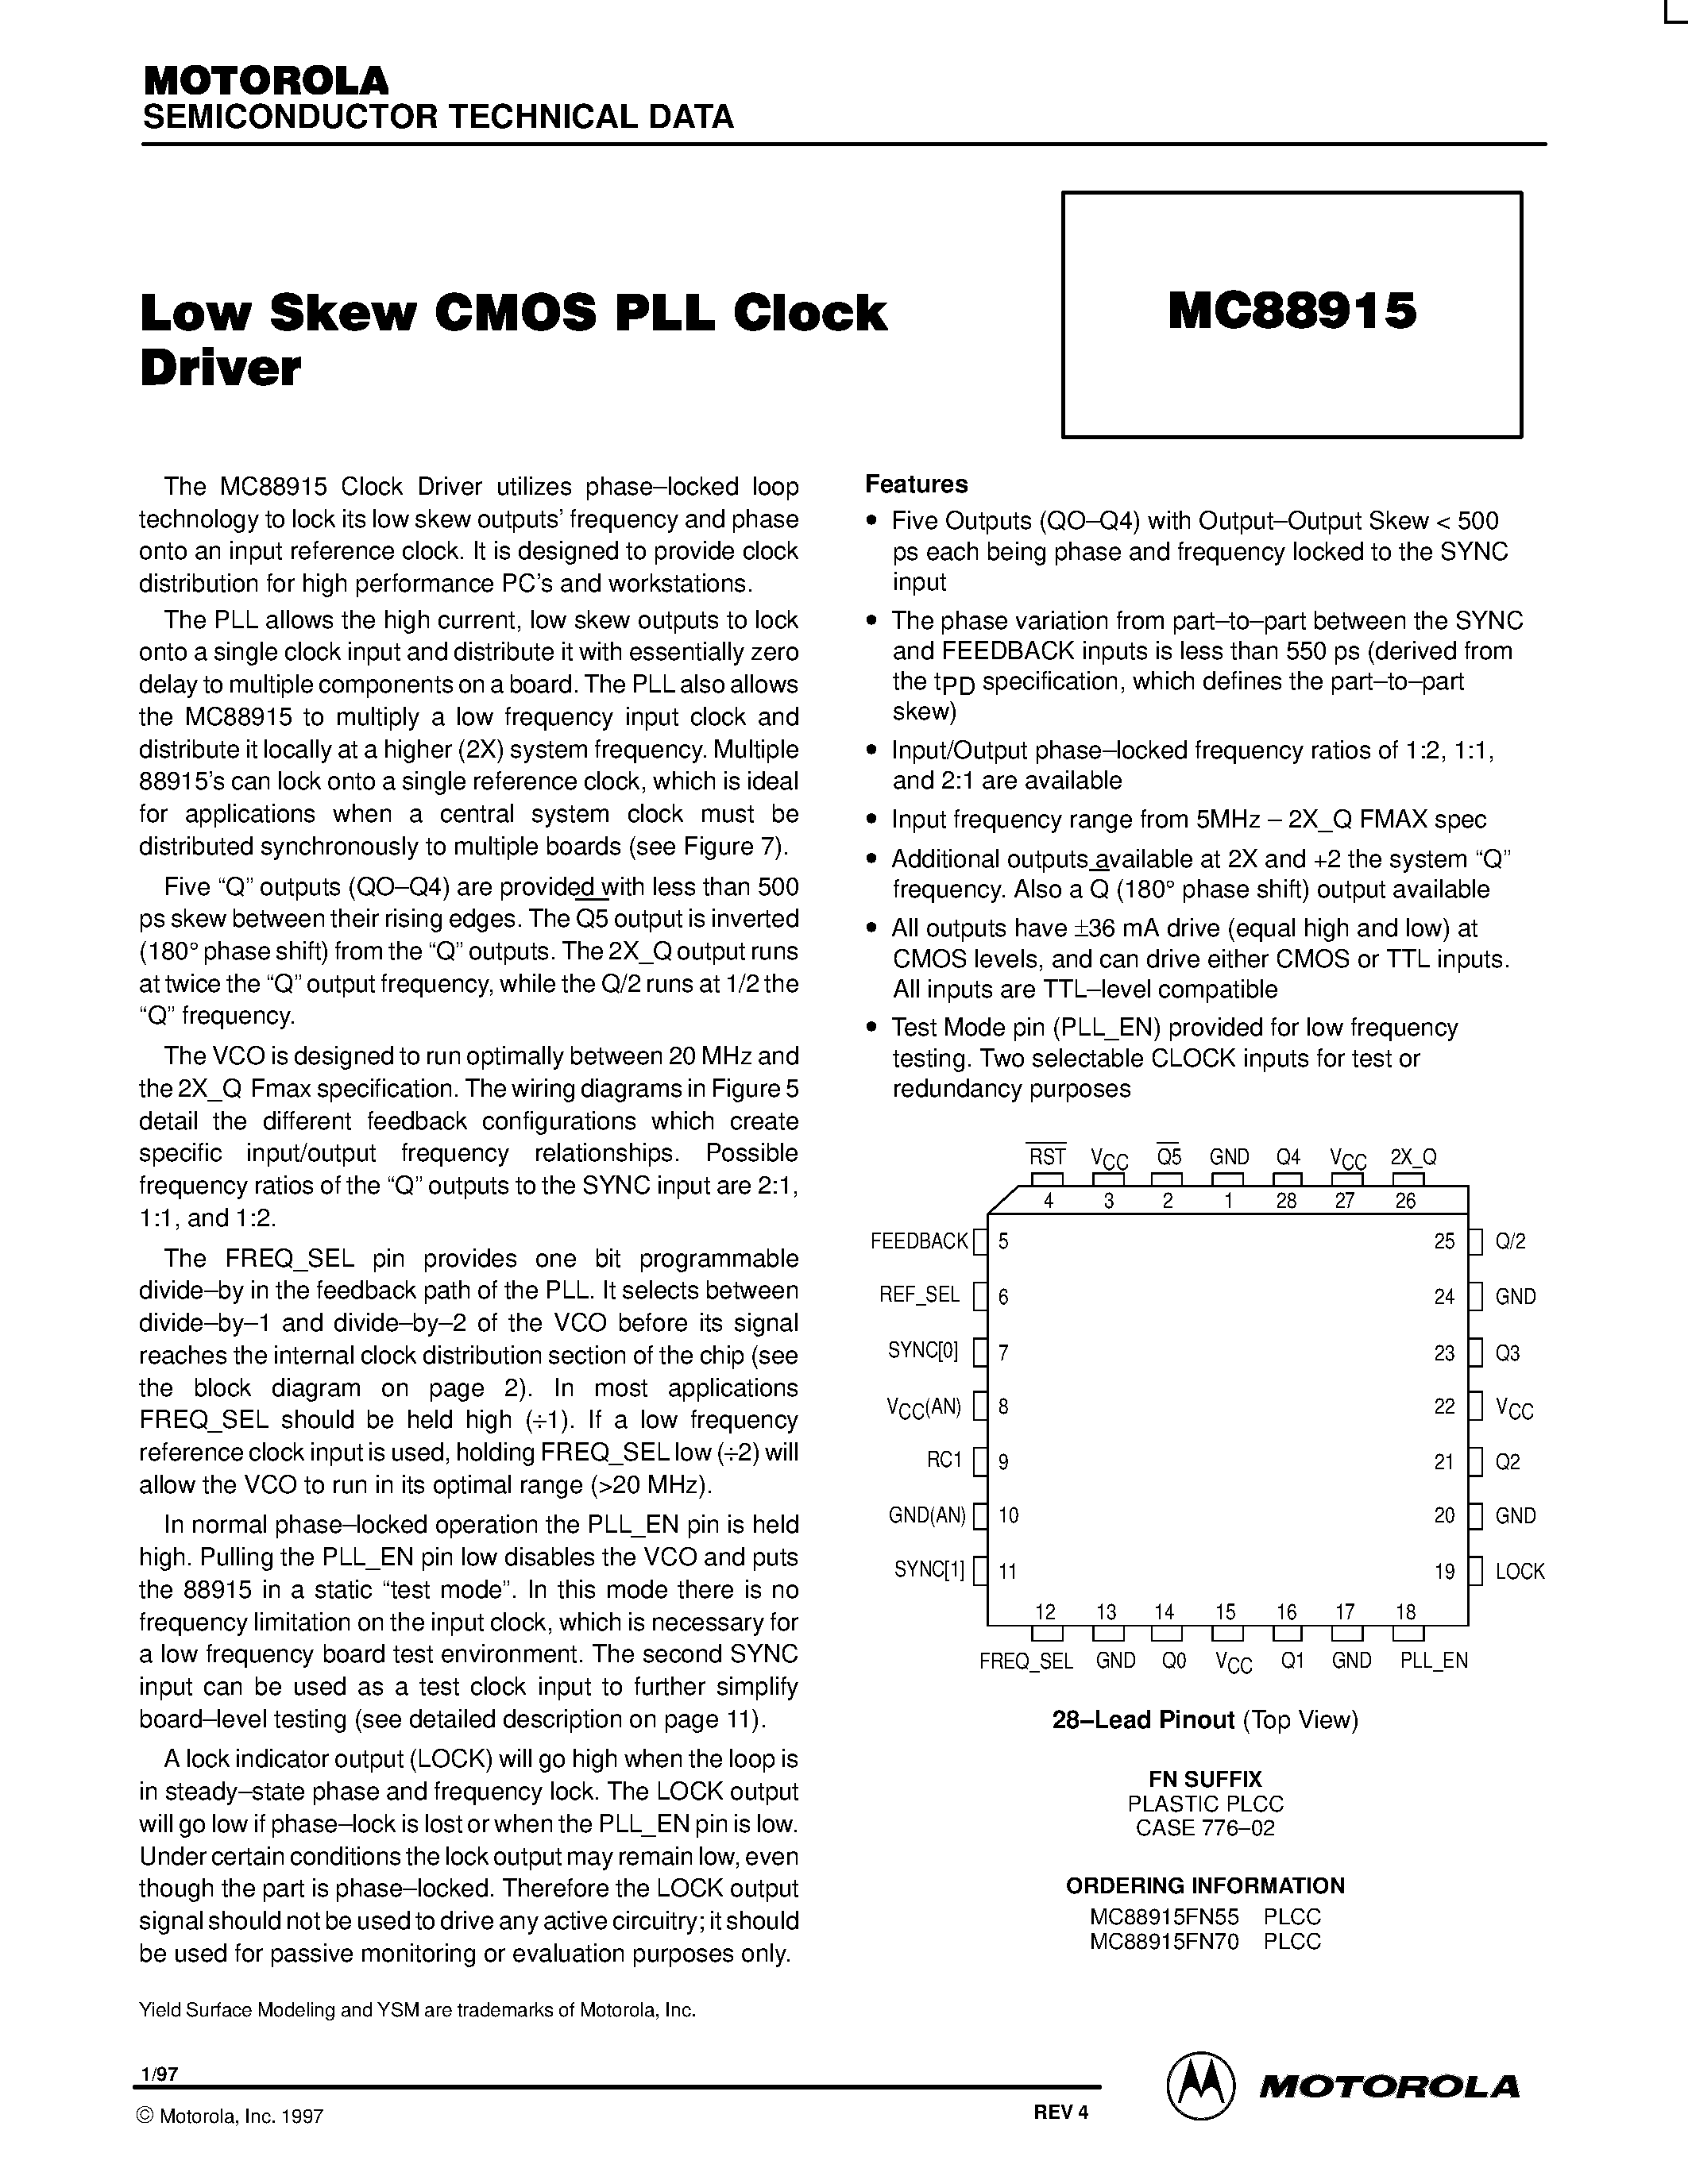 Datasheet MC88915FN55PLCC - Low Skew CMOS PLL Clock Driver page 1